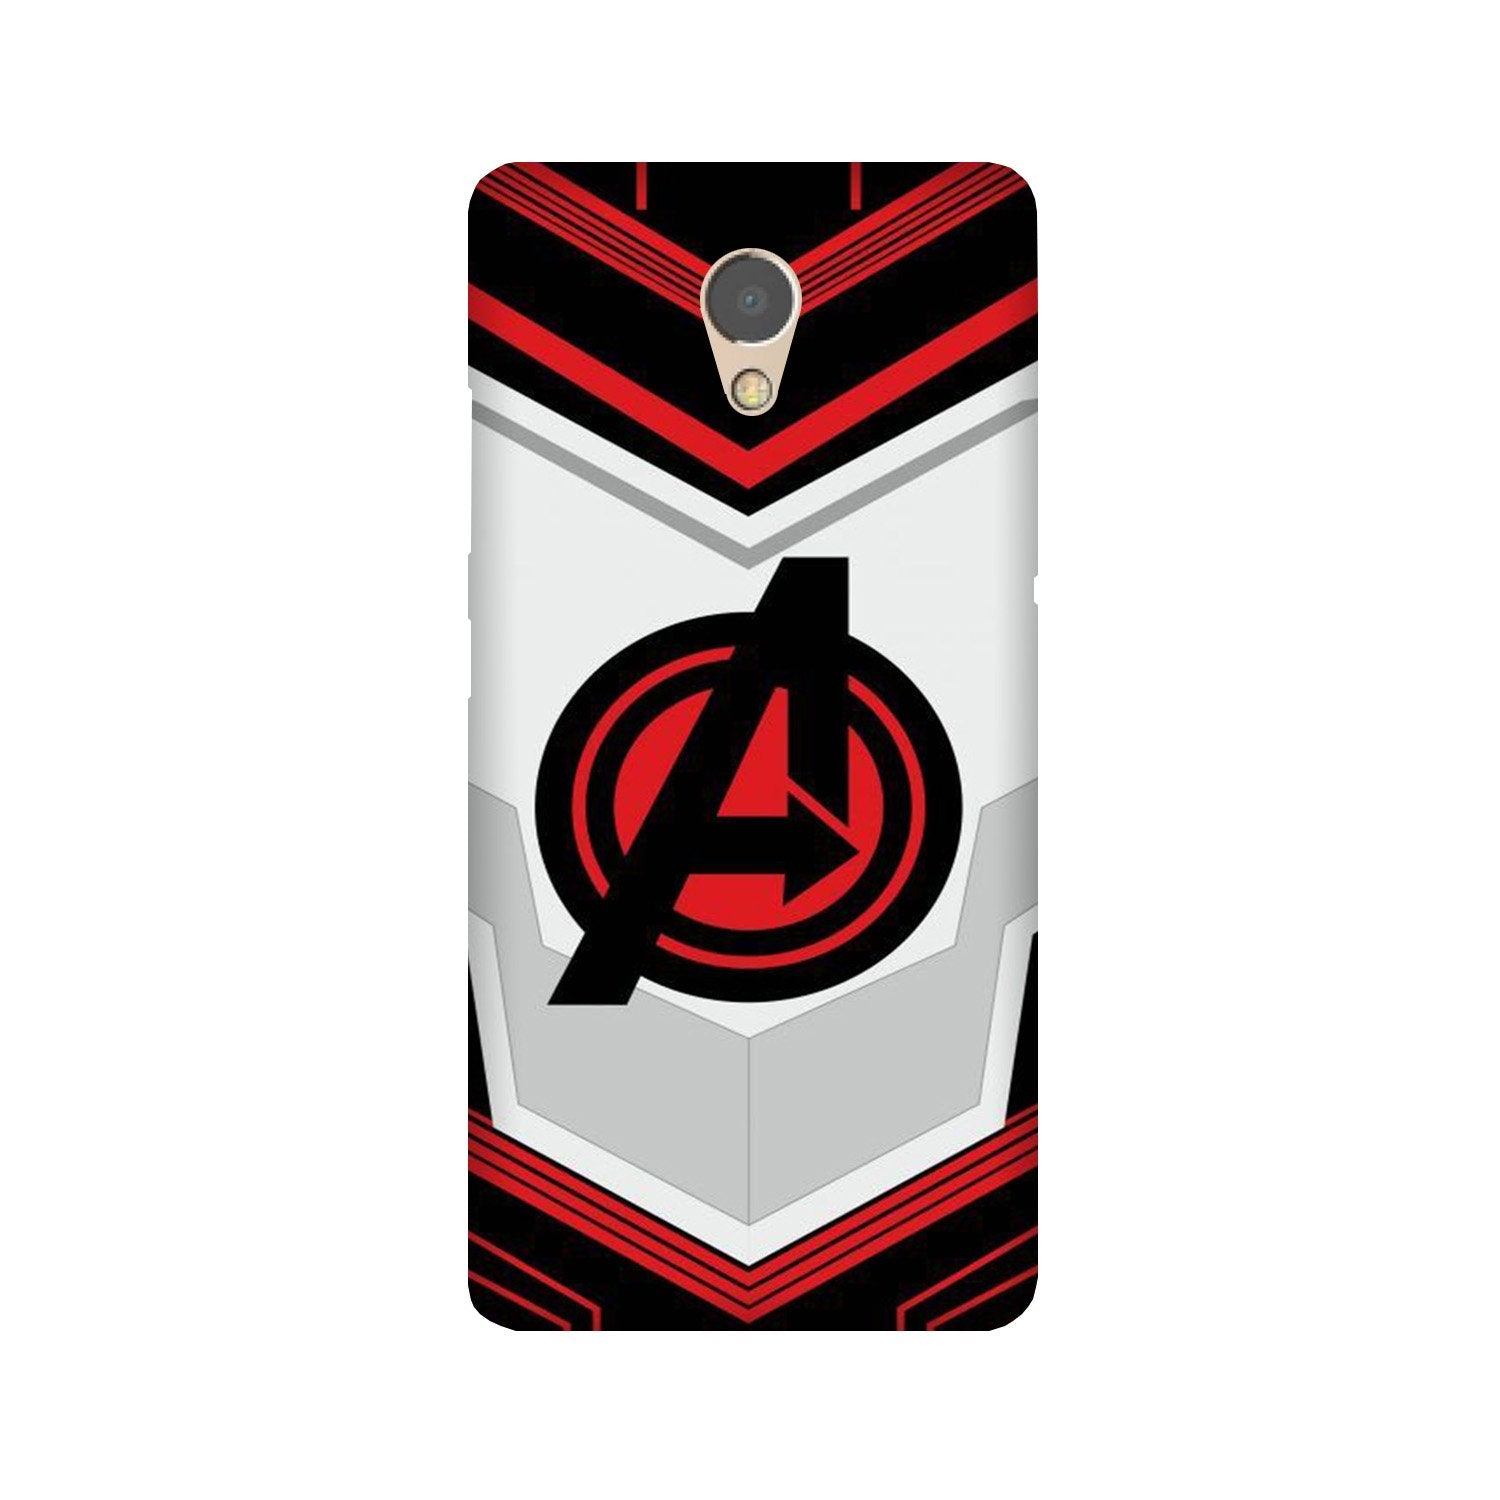 Avengers2 Case for Lenovo P2 (Design No. 255)